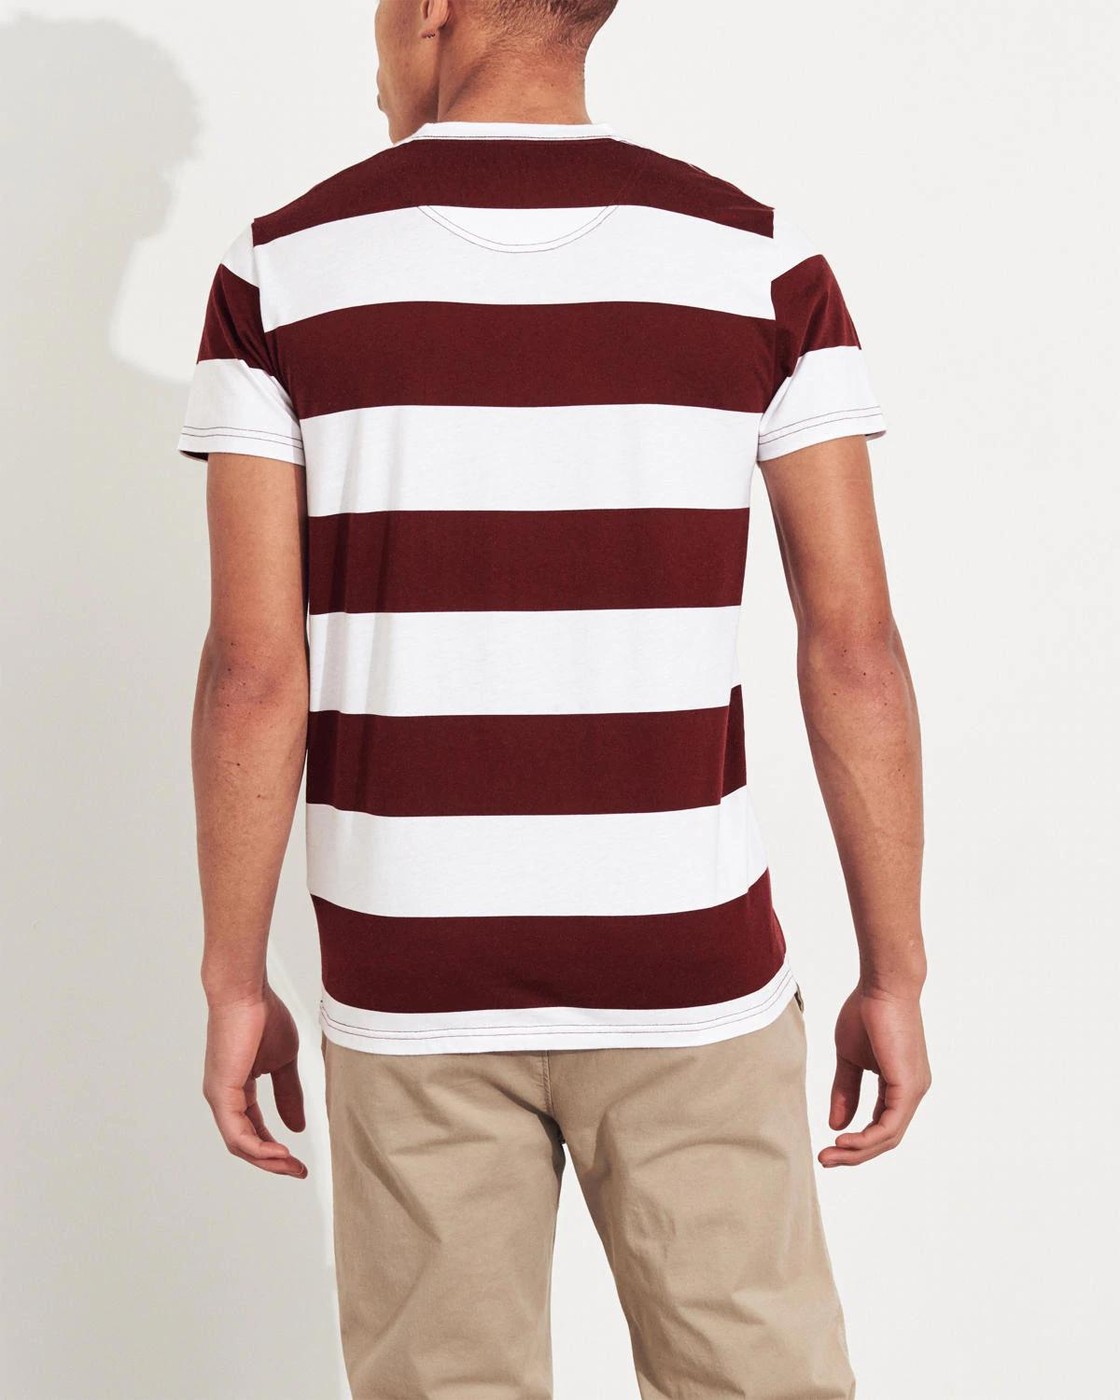 Бордовая футболка - мужская футболка Hollister, S, S